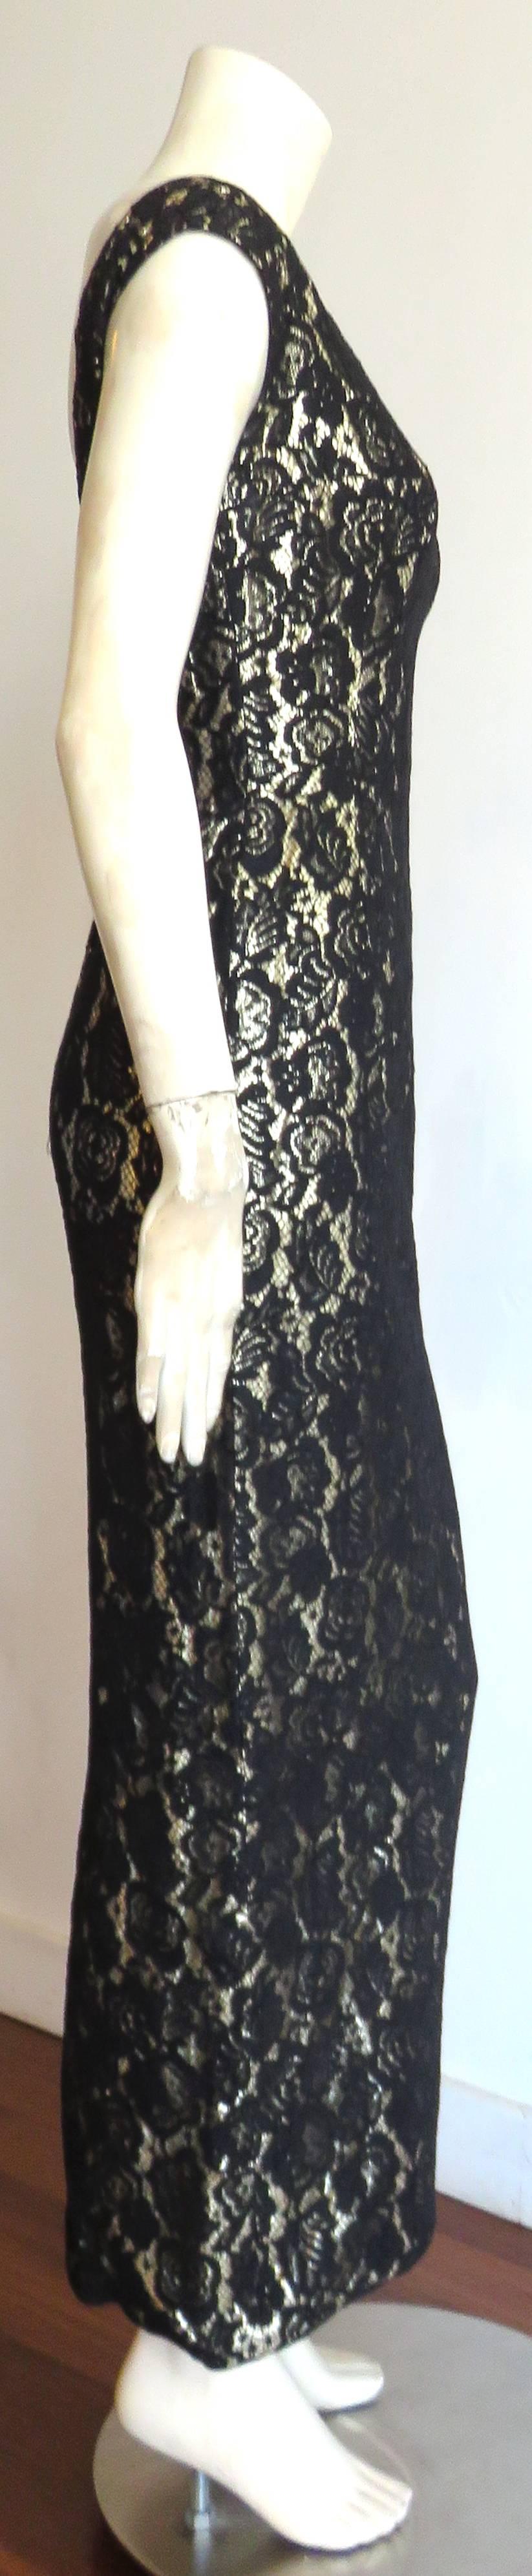 Women's 1960's MR. BLACKWELL CUSTOM Gold lame black lace overlay evening dress